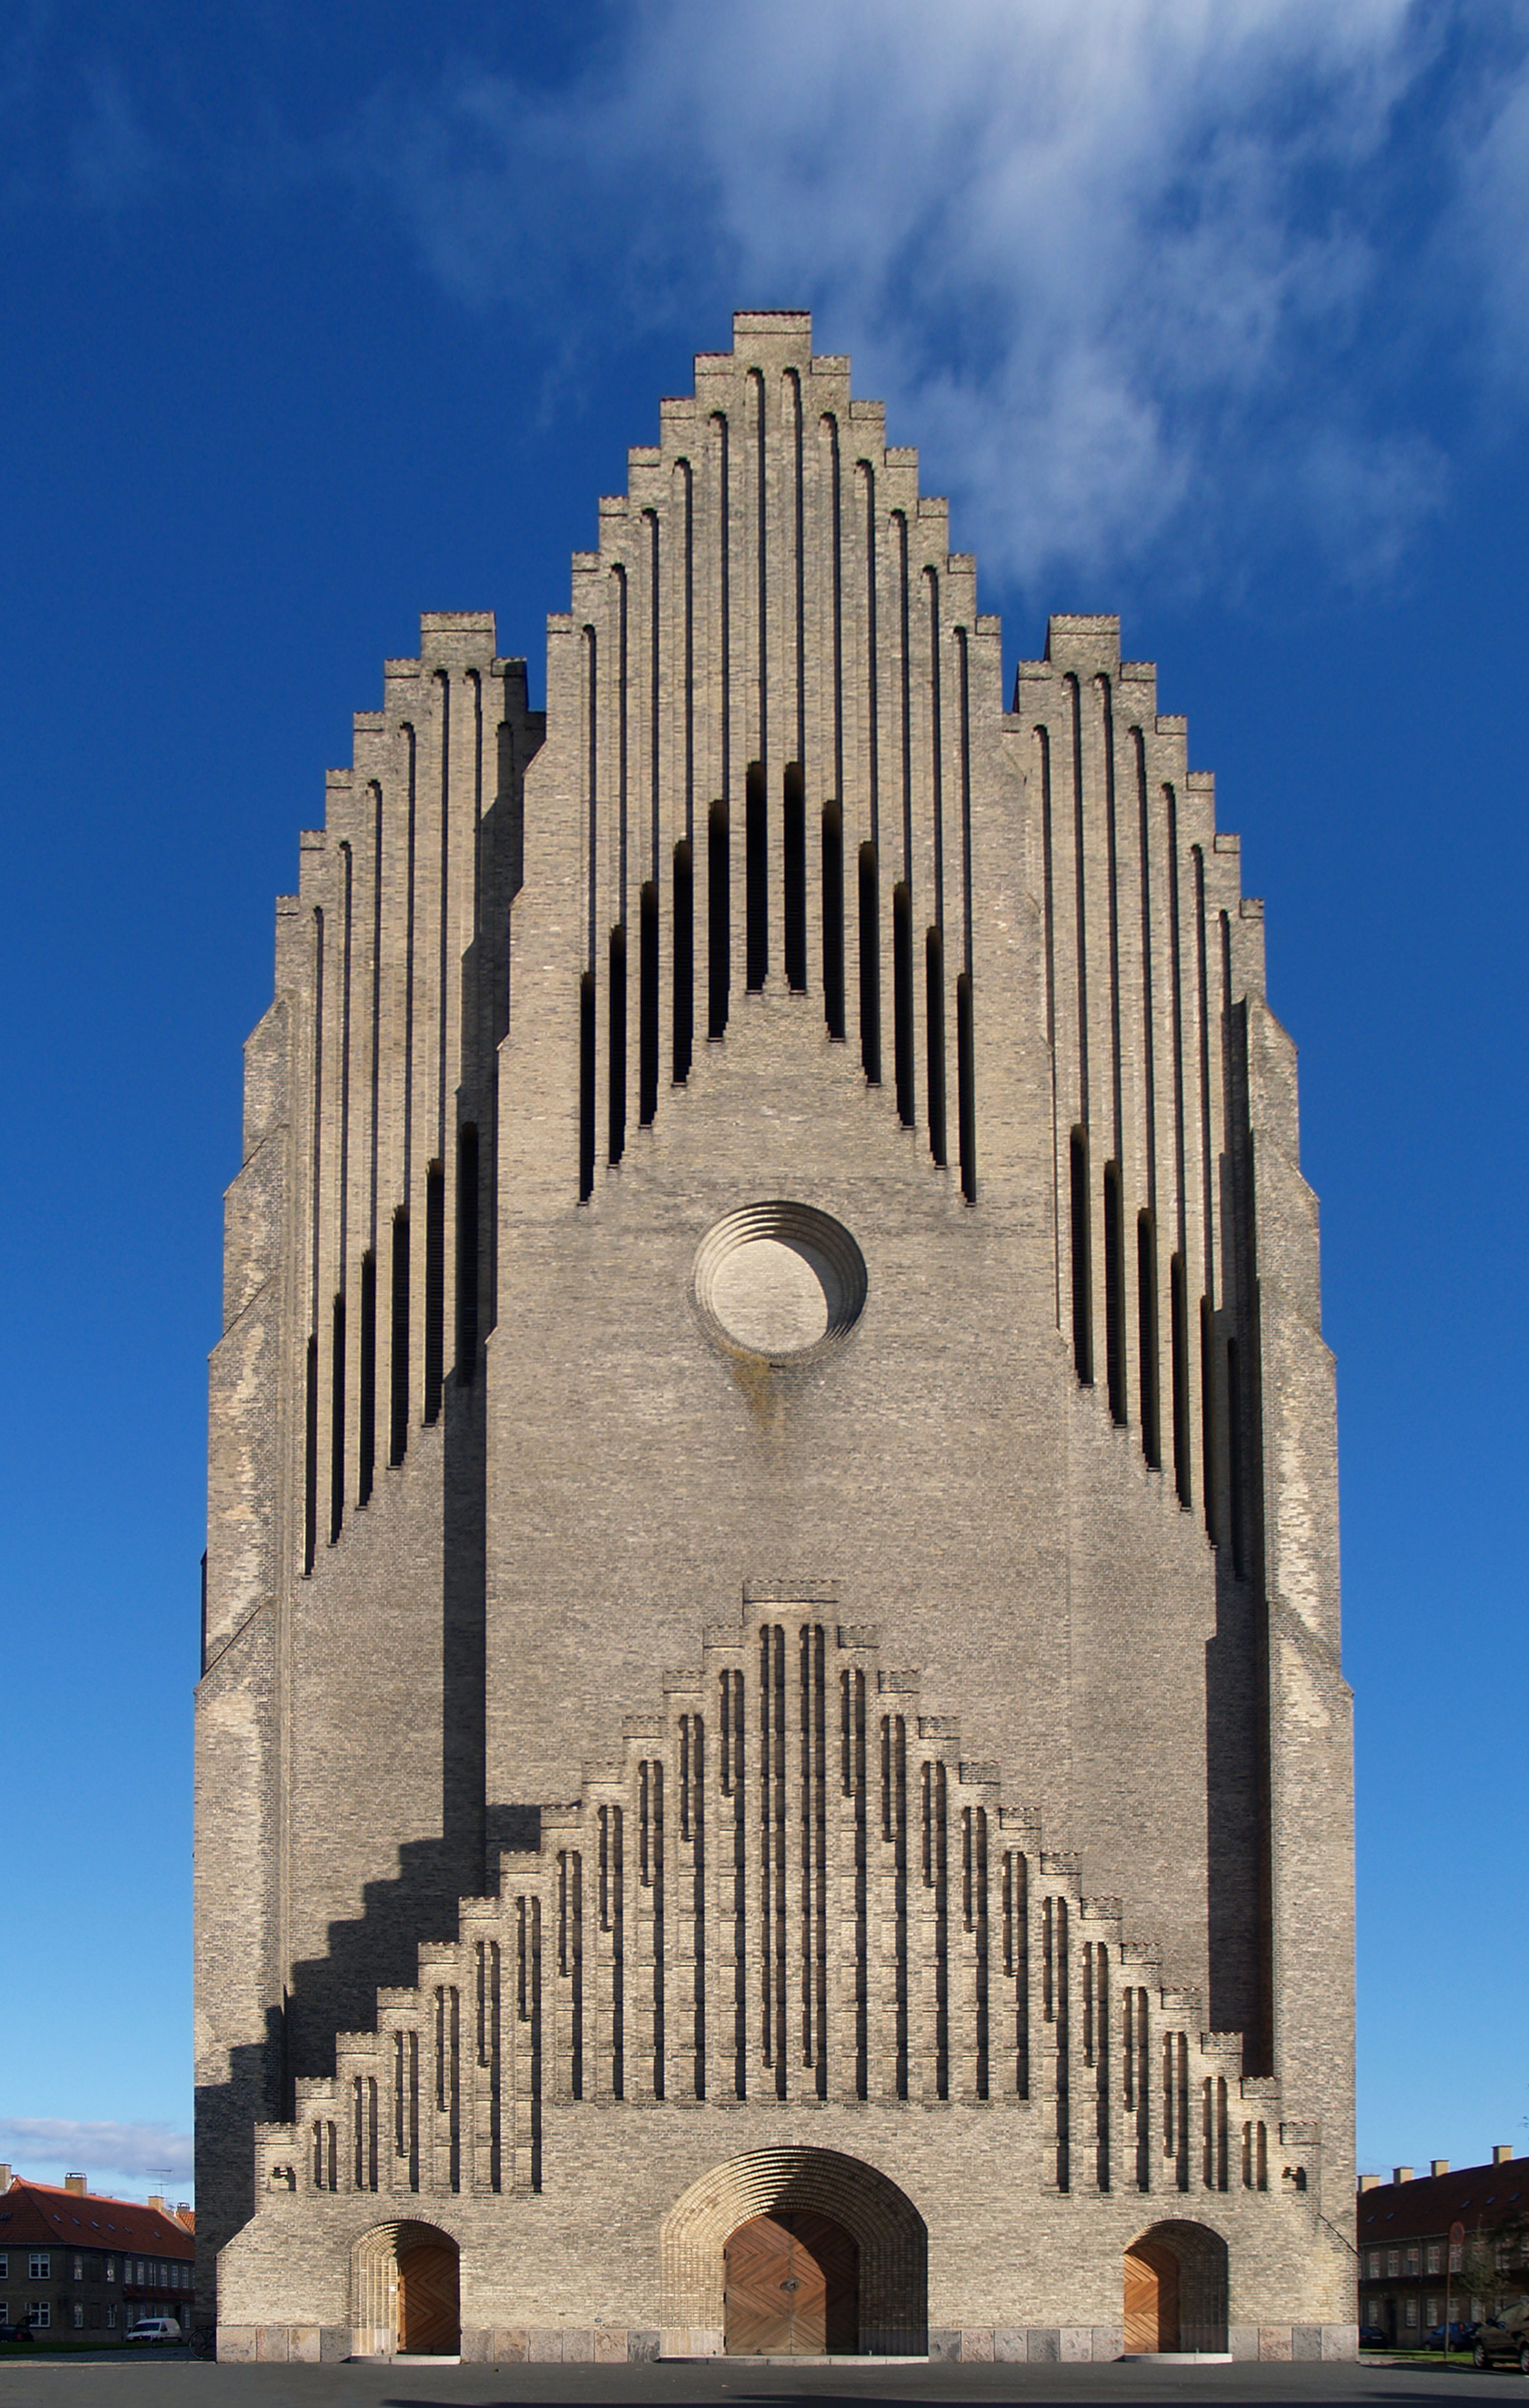 højde mistet hjerte Ugyldigt File:Pv jensen-klint 05 grundtvig memorial church 1913-1940.jpg - Wikimedia  Commons